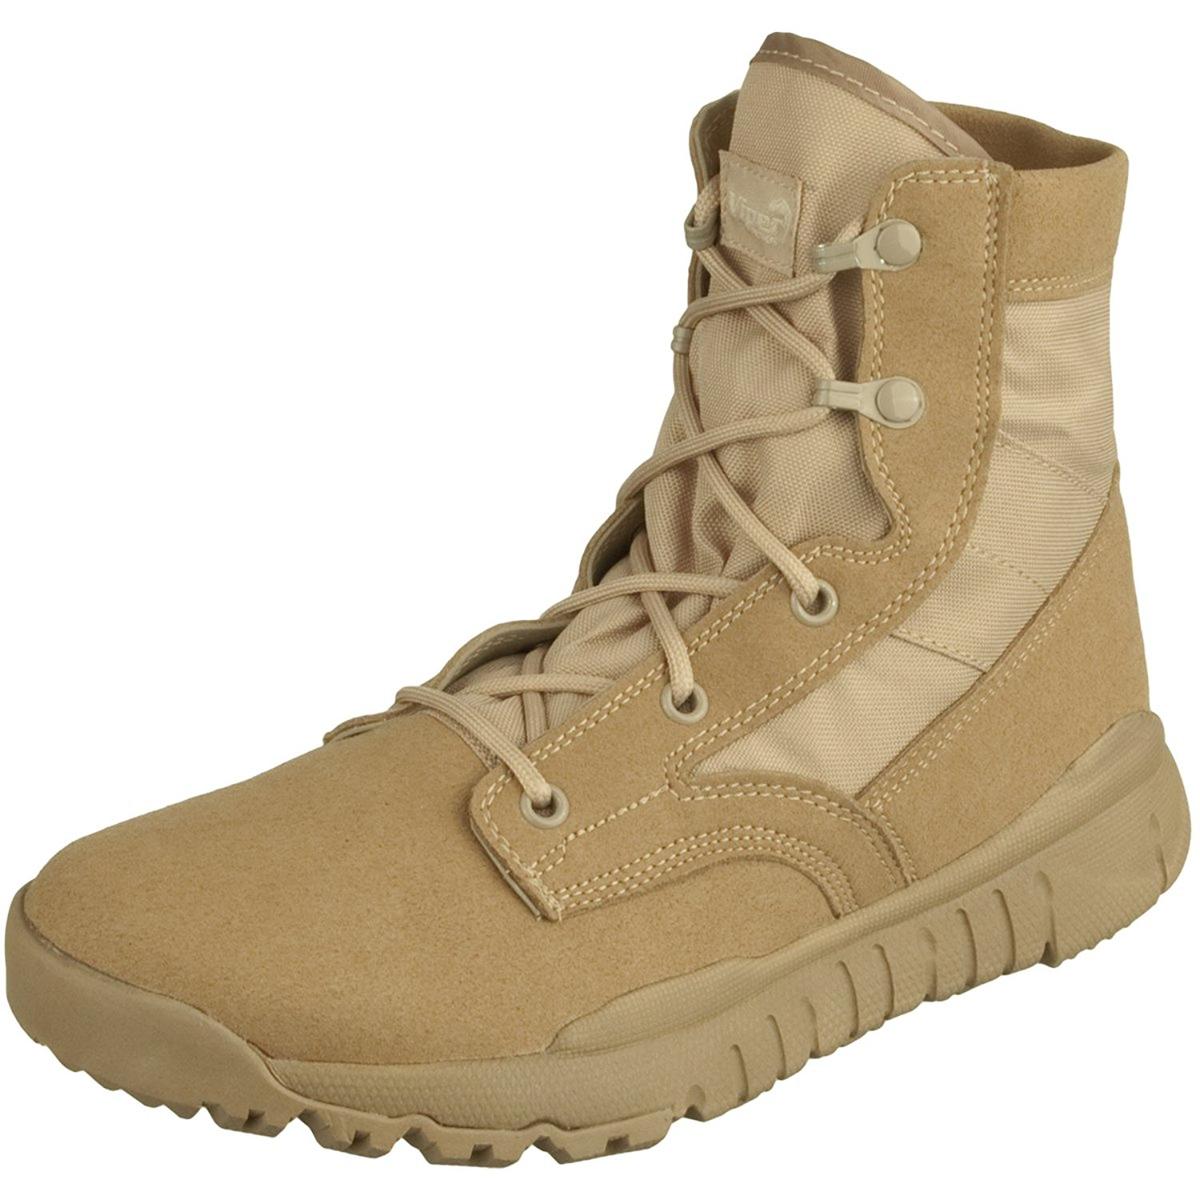 Viper Tactical Sneaker Boot - Coyote | eBay